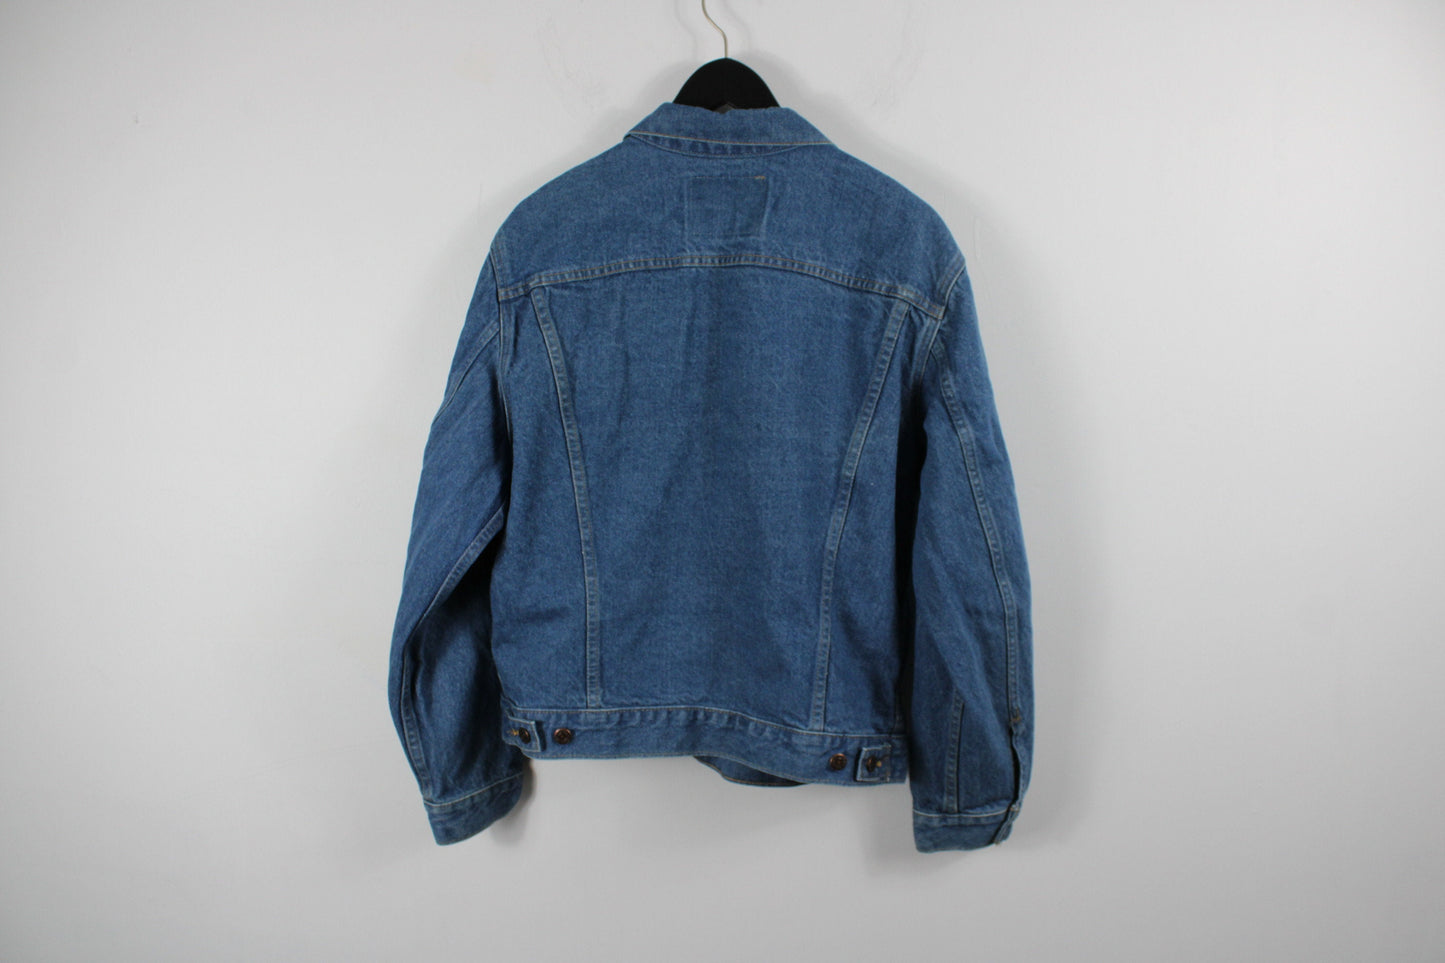 Vintage Levi's Jacket / Levis Denim Bomber Jean Coat / 90's / 2000's Clothing